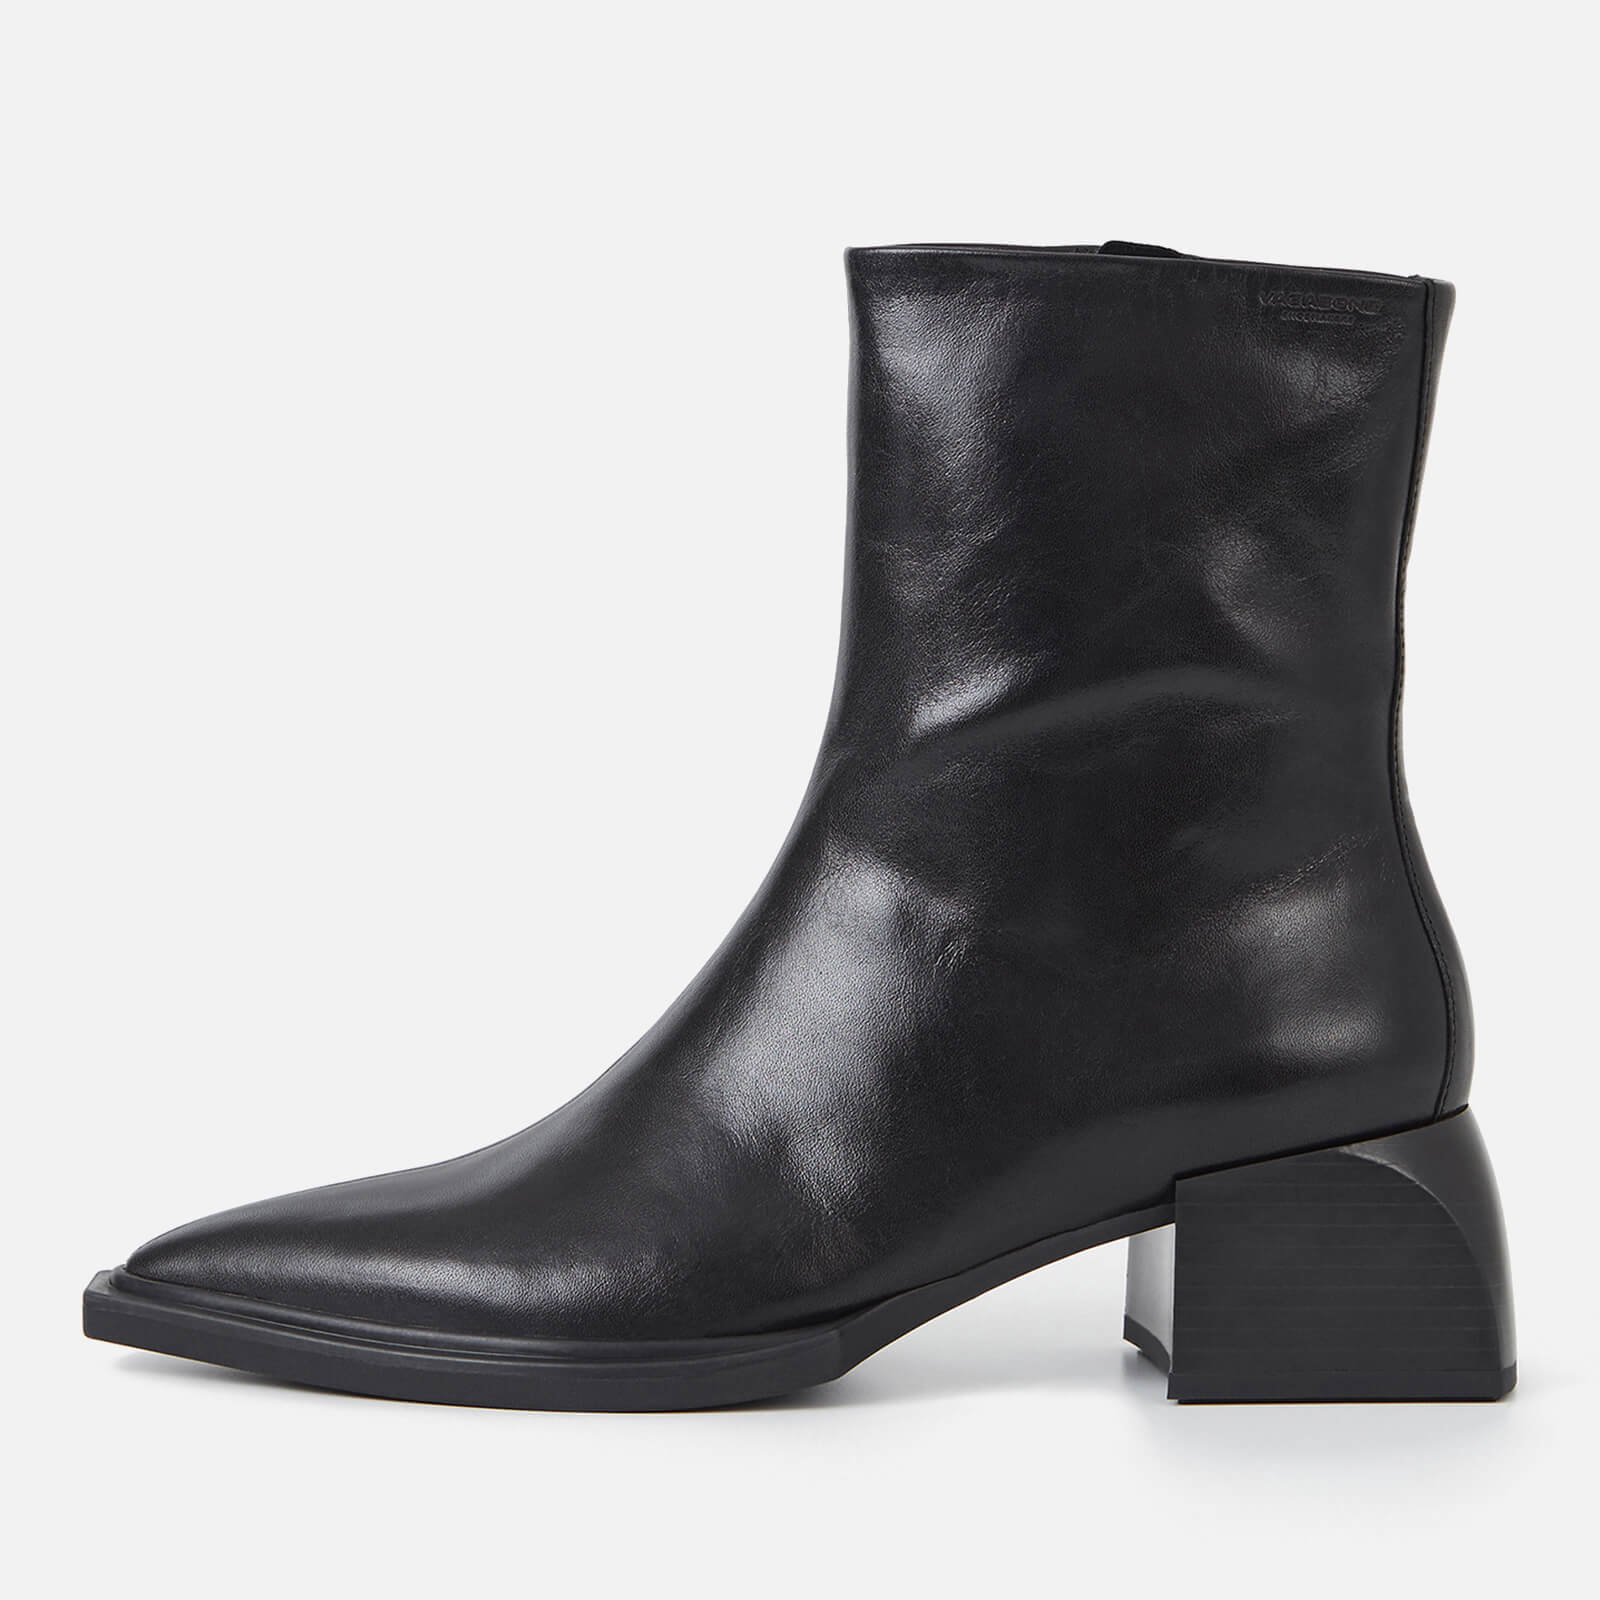 Vagabond Women’s Vivian Leather Heeled Boots